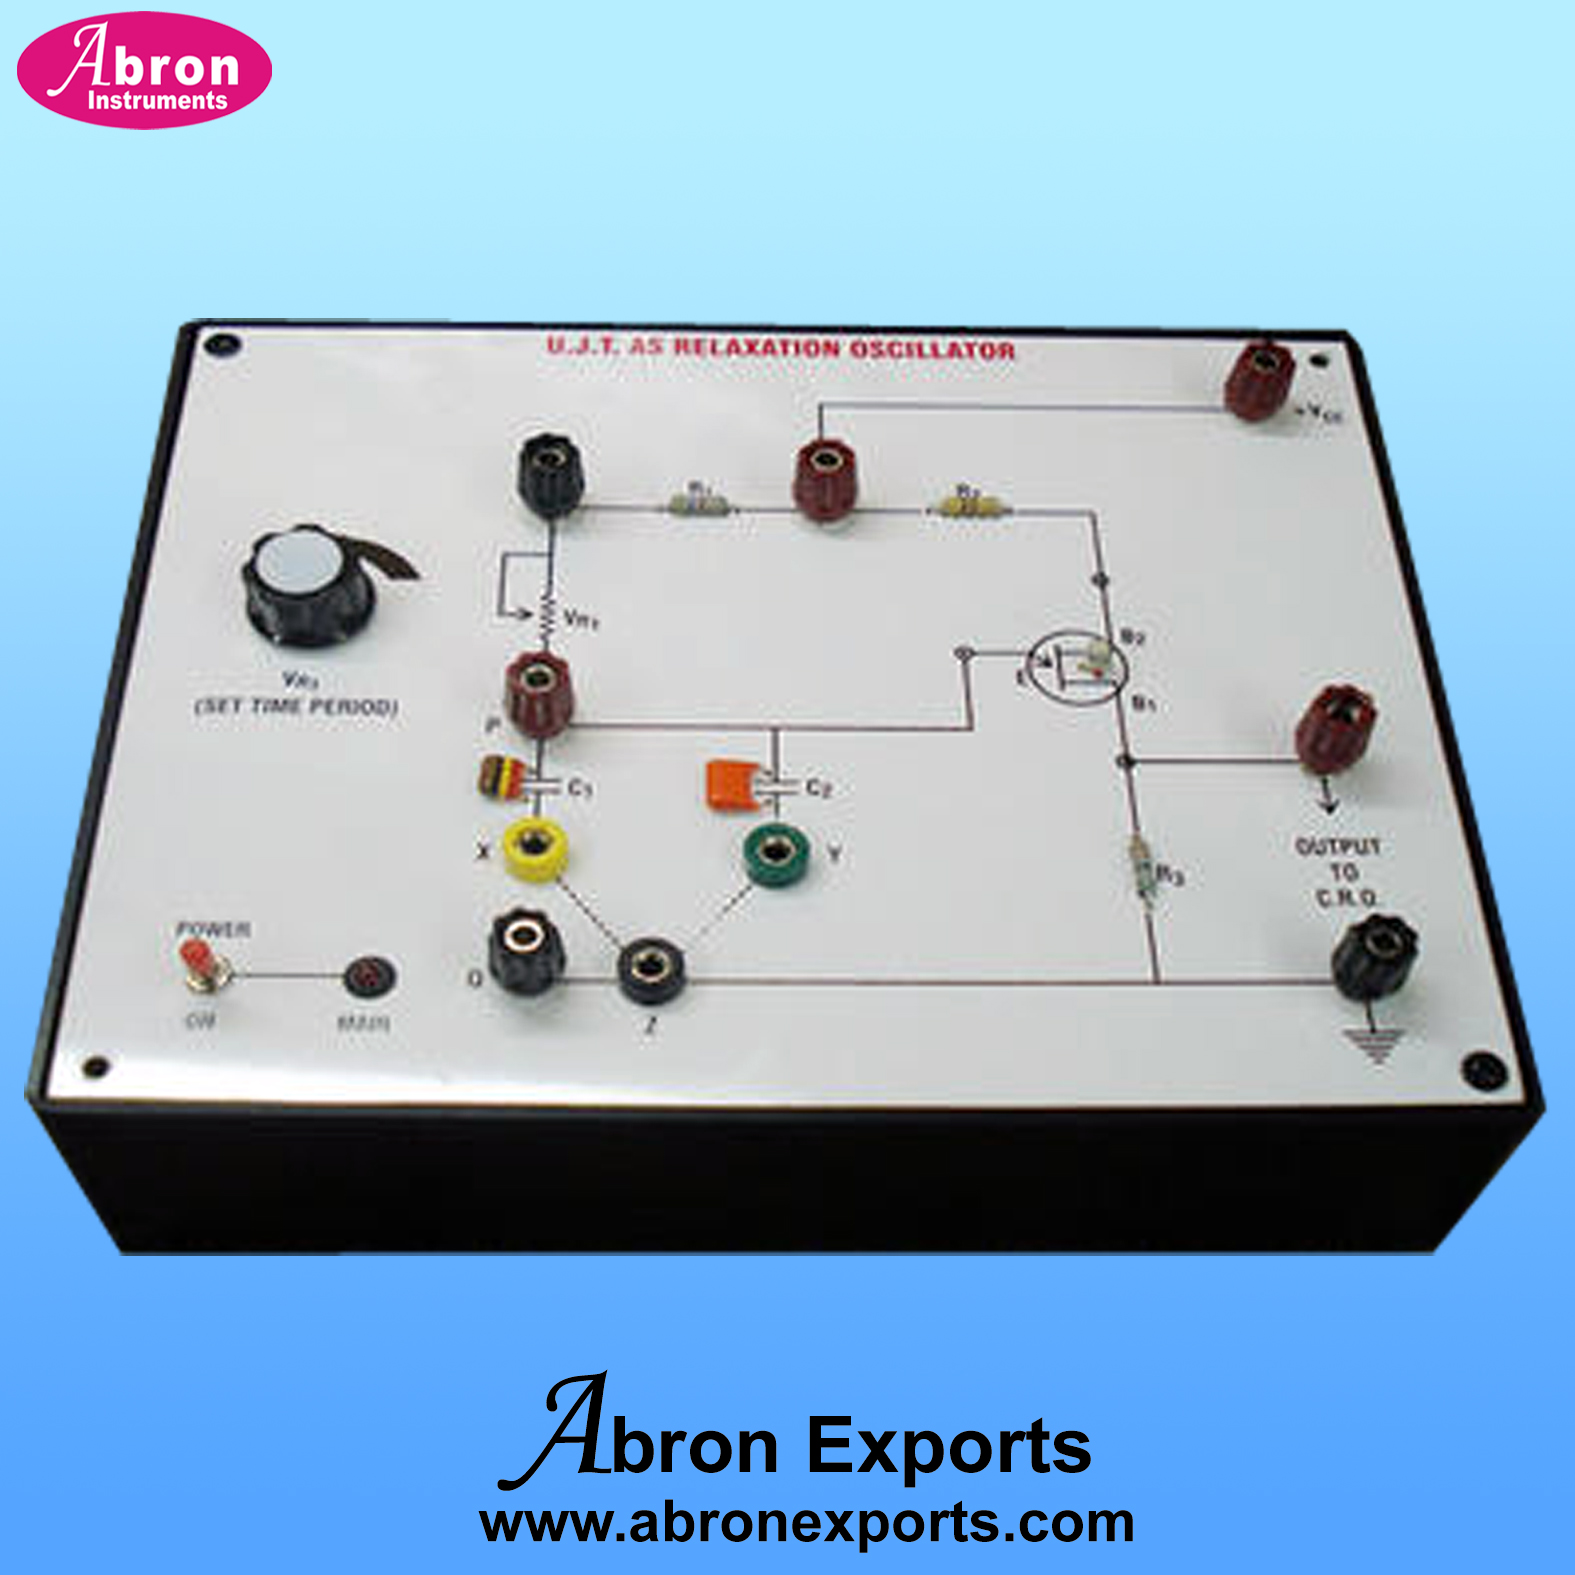 Oscillator Relaxation Oscillator Trainer circuit With Power Supply Input Audio Oscillator Output sockets for CRO AE-1352-E